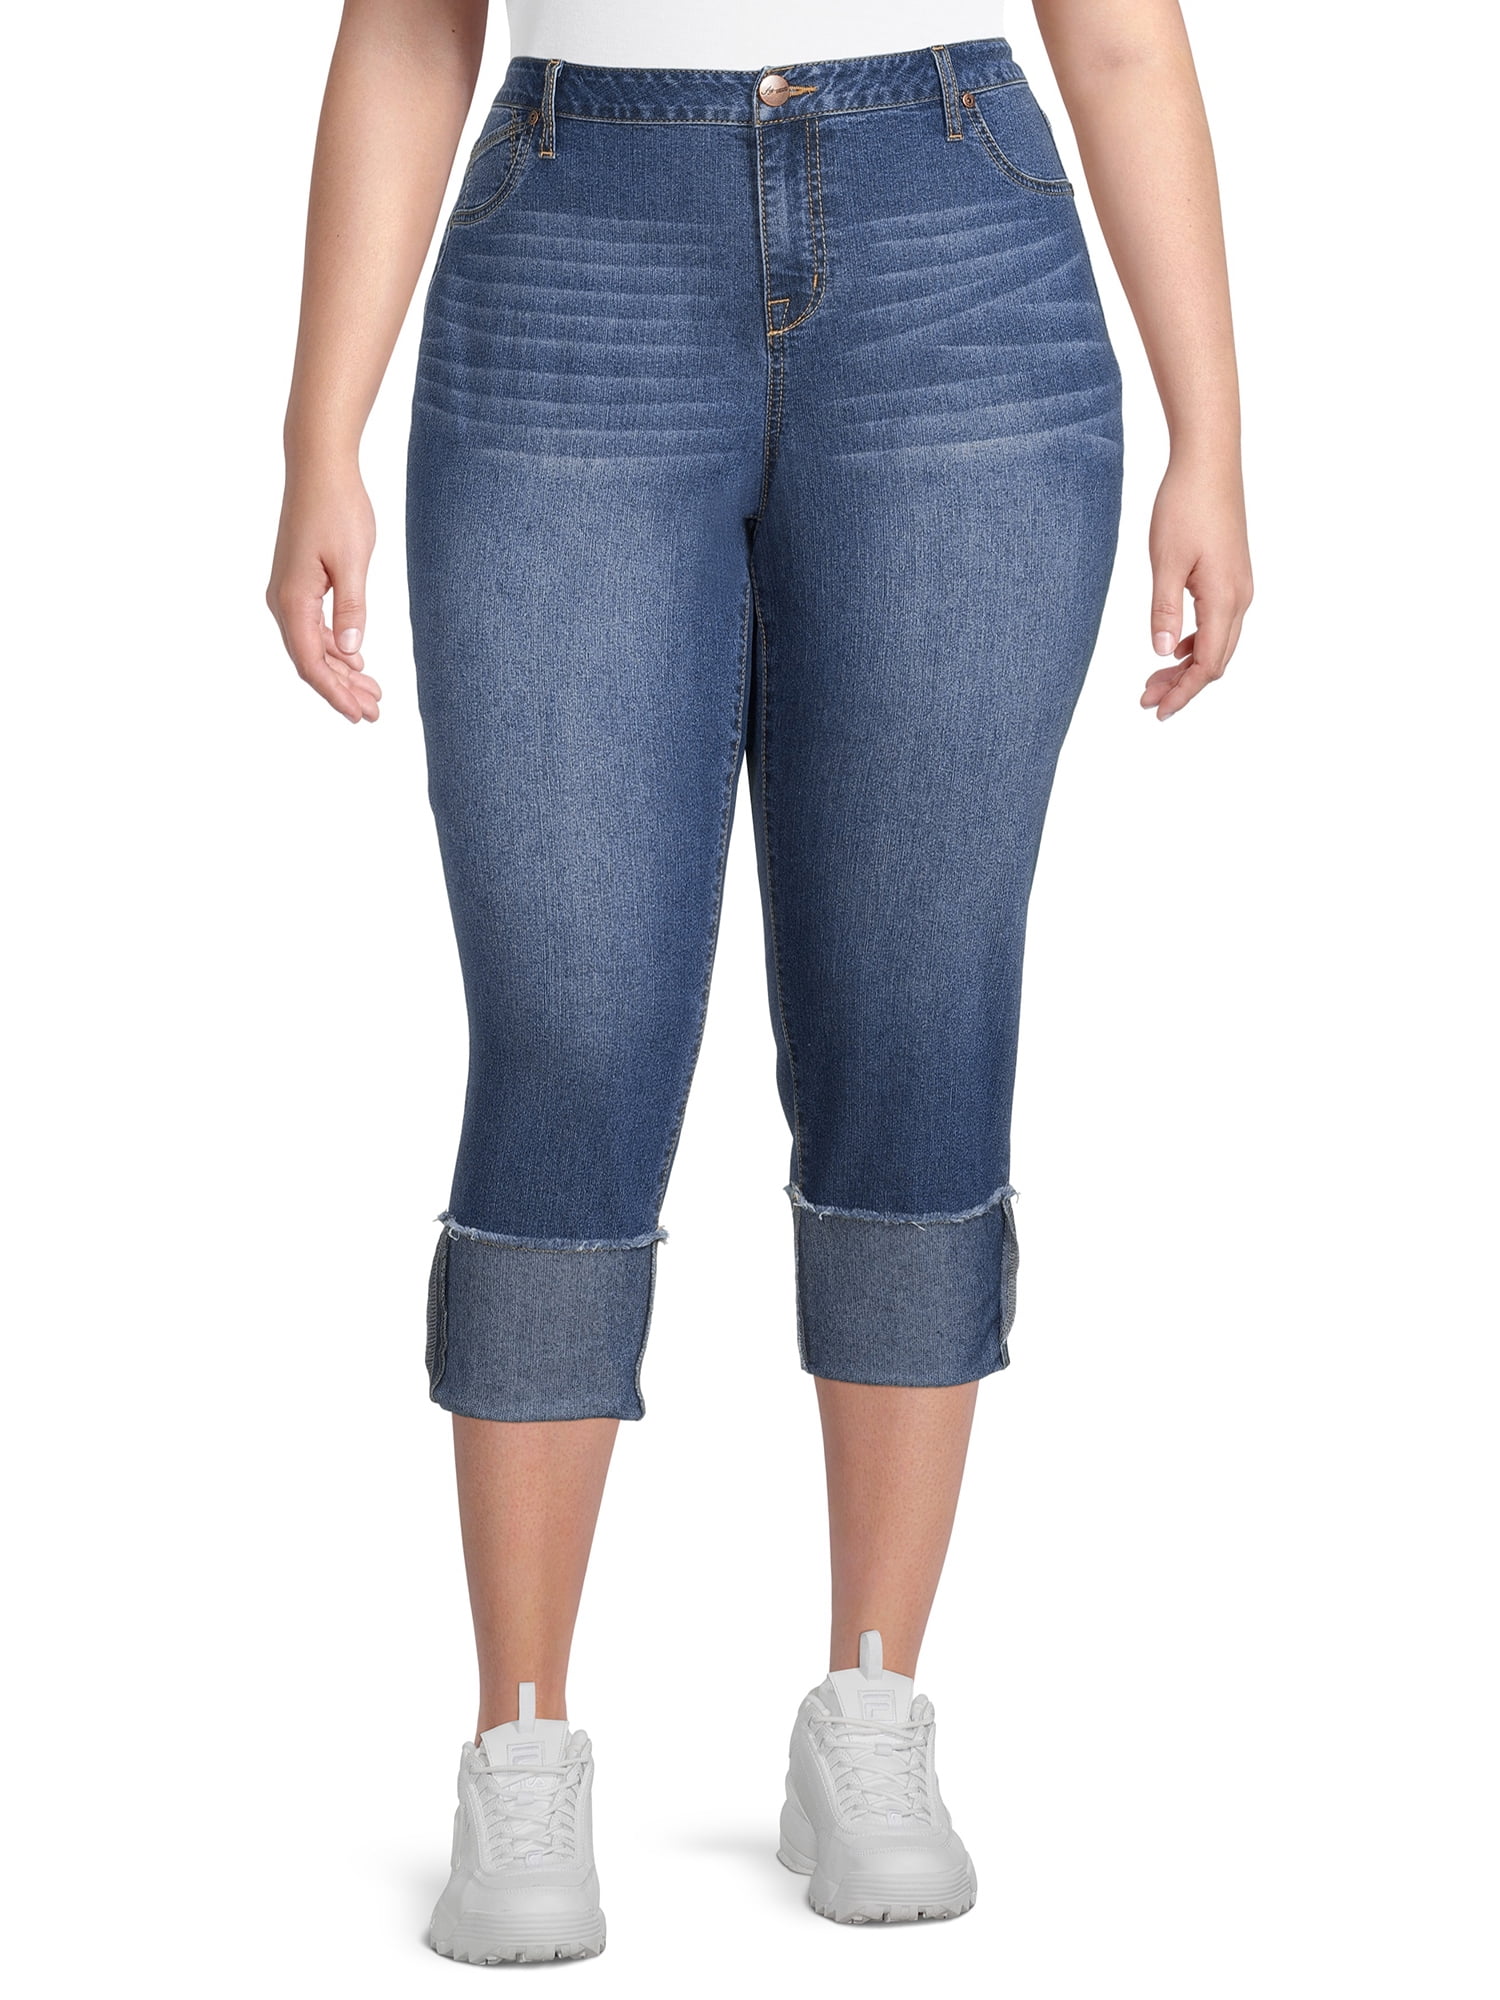 A3 Denim Women's Plus Size Roll Cuff Capri Jeans - Walmart.com